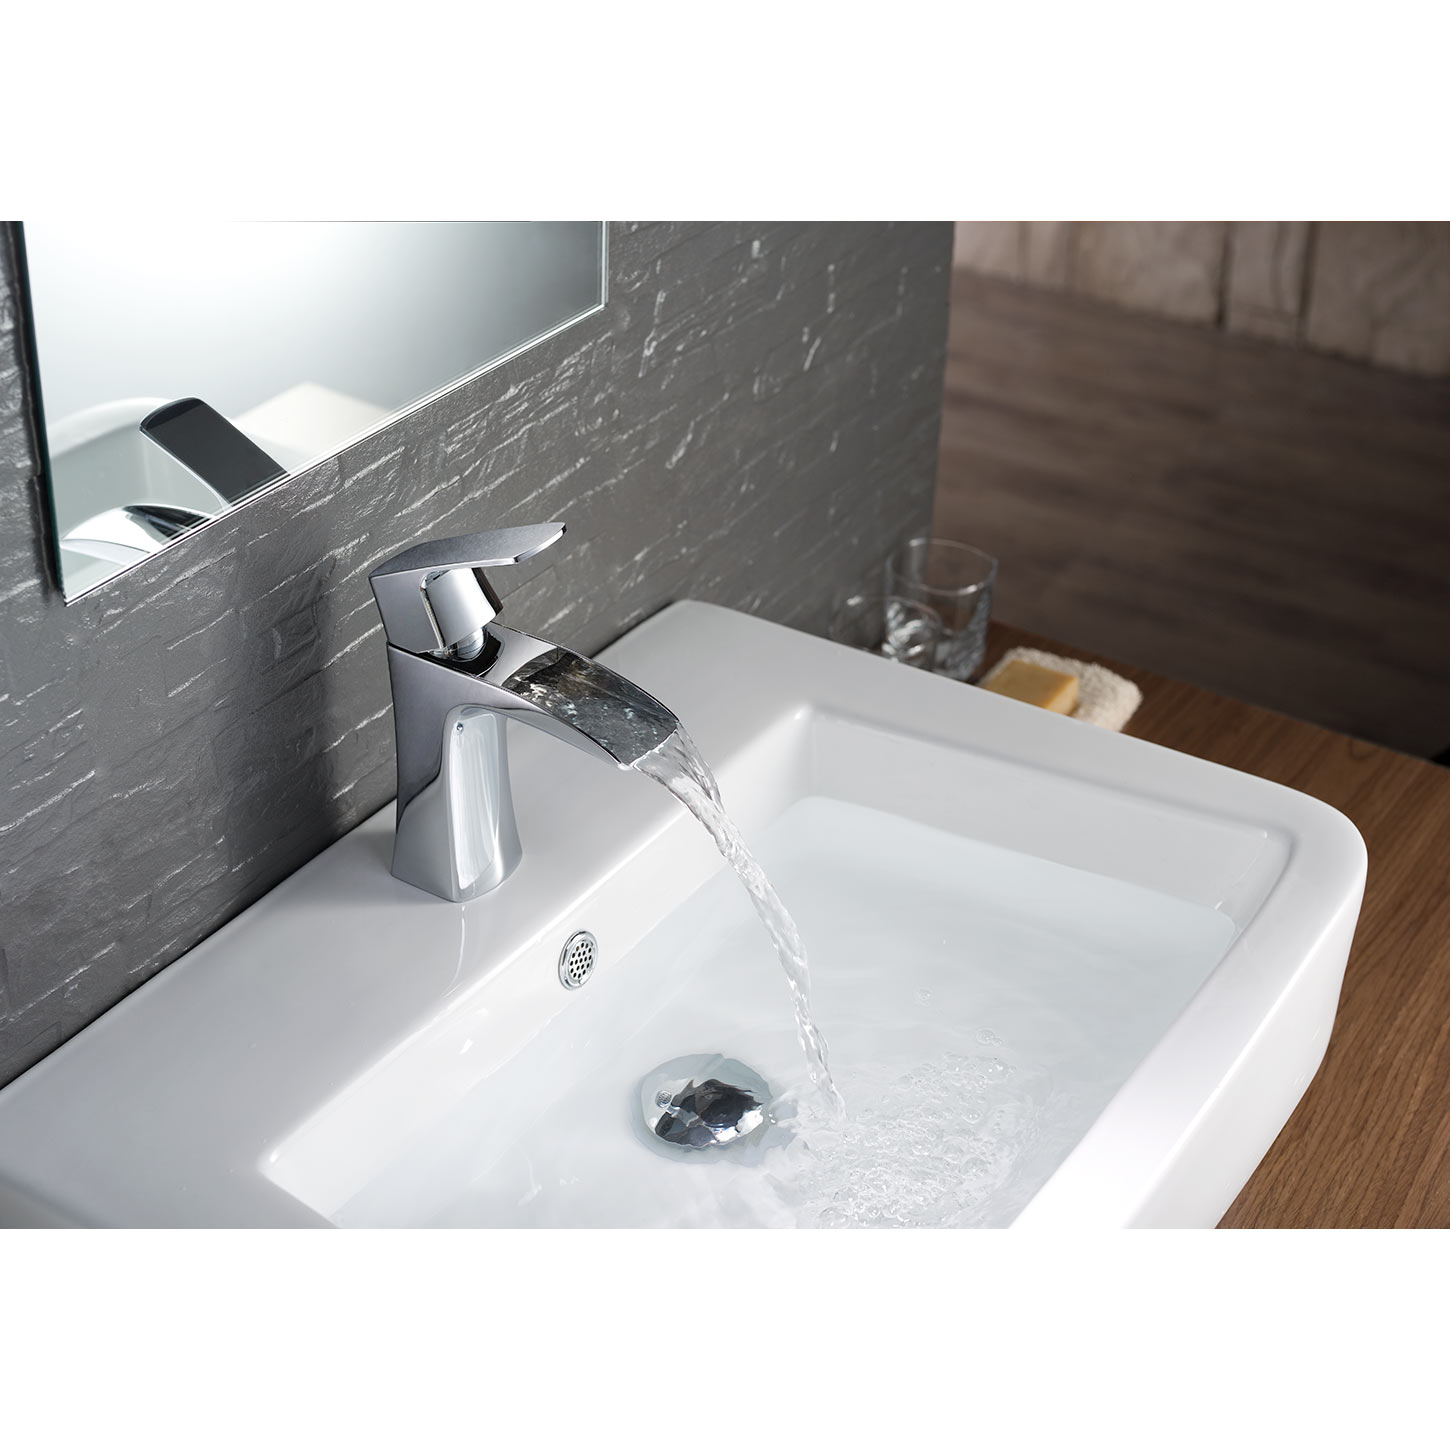 Faucet Rainier CBI Chrome in AV-BF02CH on Single Bathroom Buy Control Waterfall